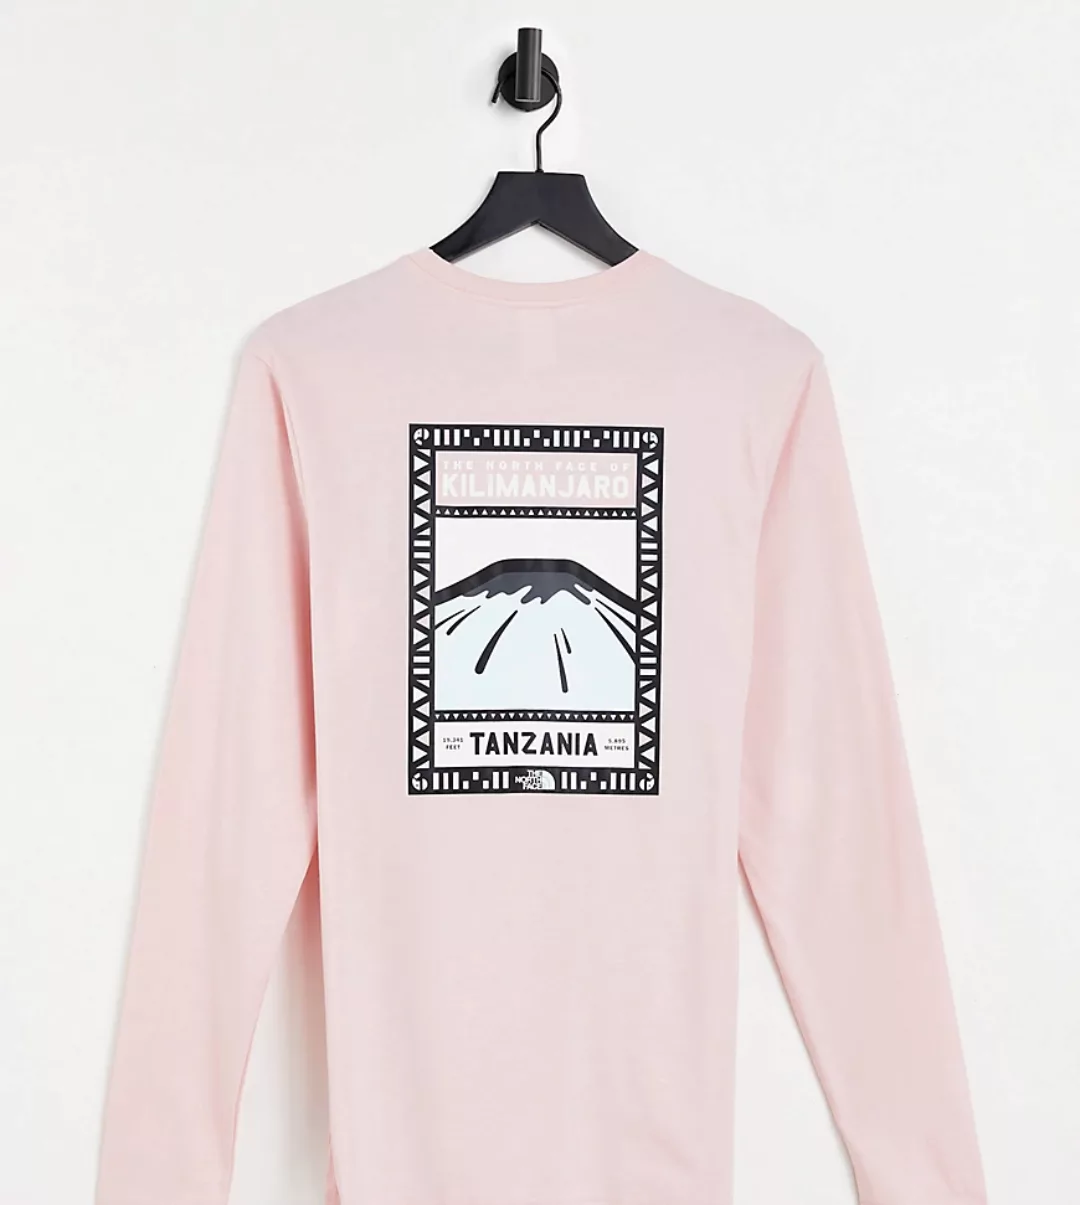 The North Face – Faces – Langärmliges Shirt in Rosa, exklusiv bei ASOS günstig online kaufen